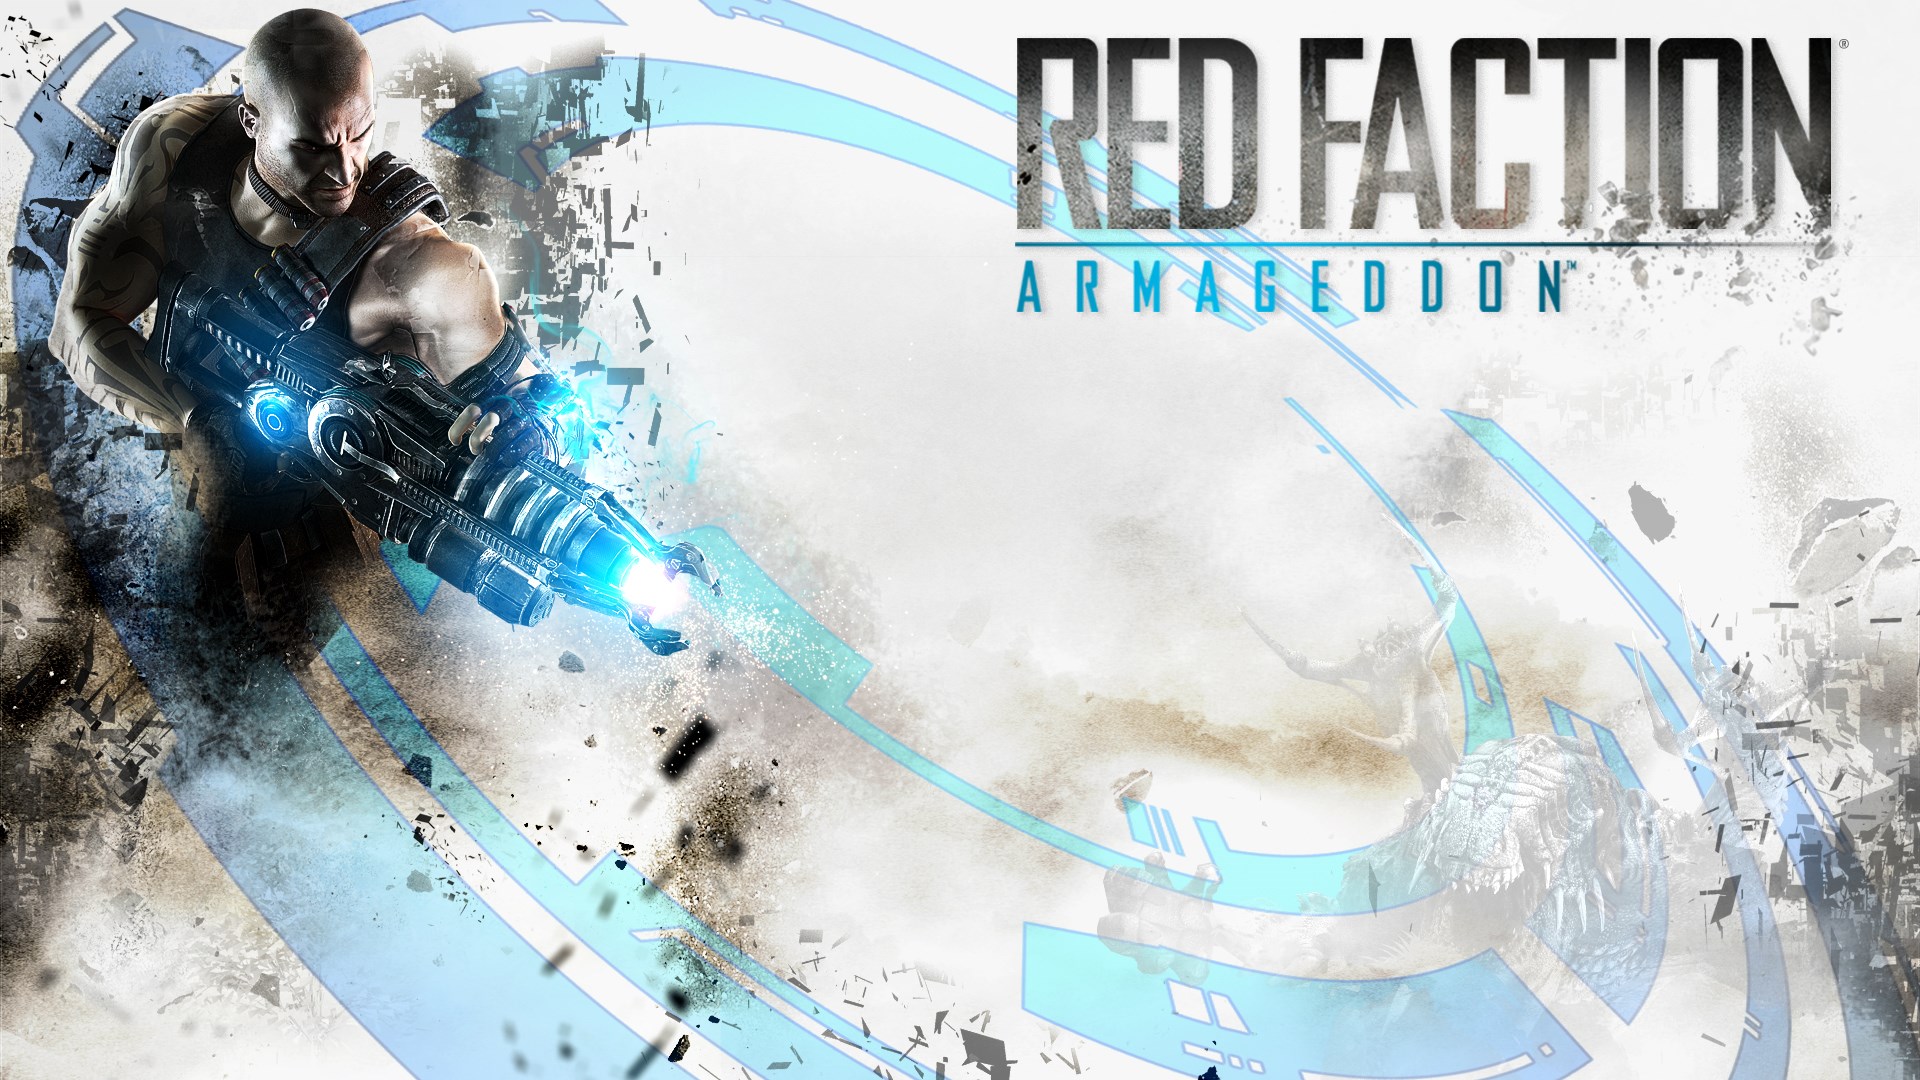 red faction armageddon path to war download